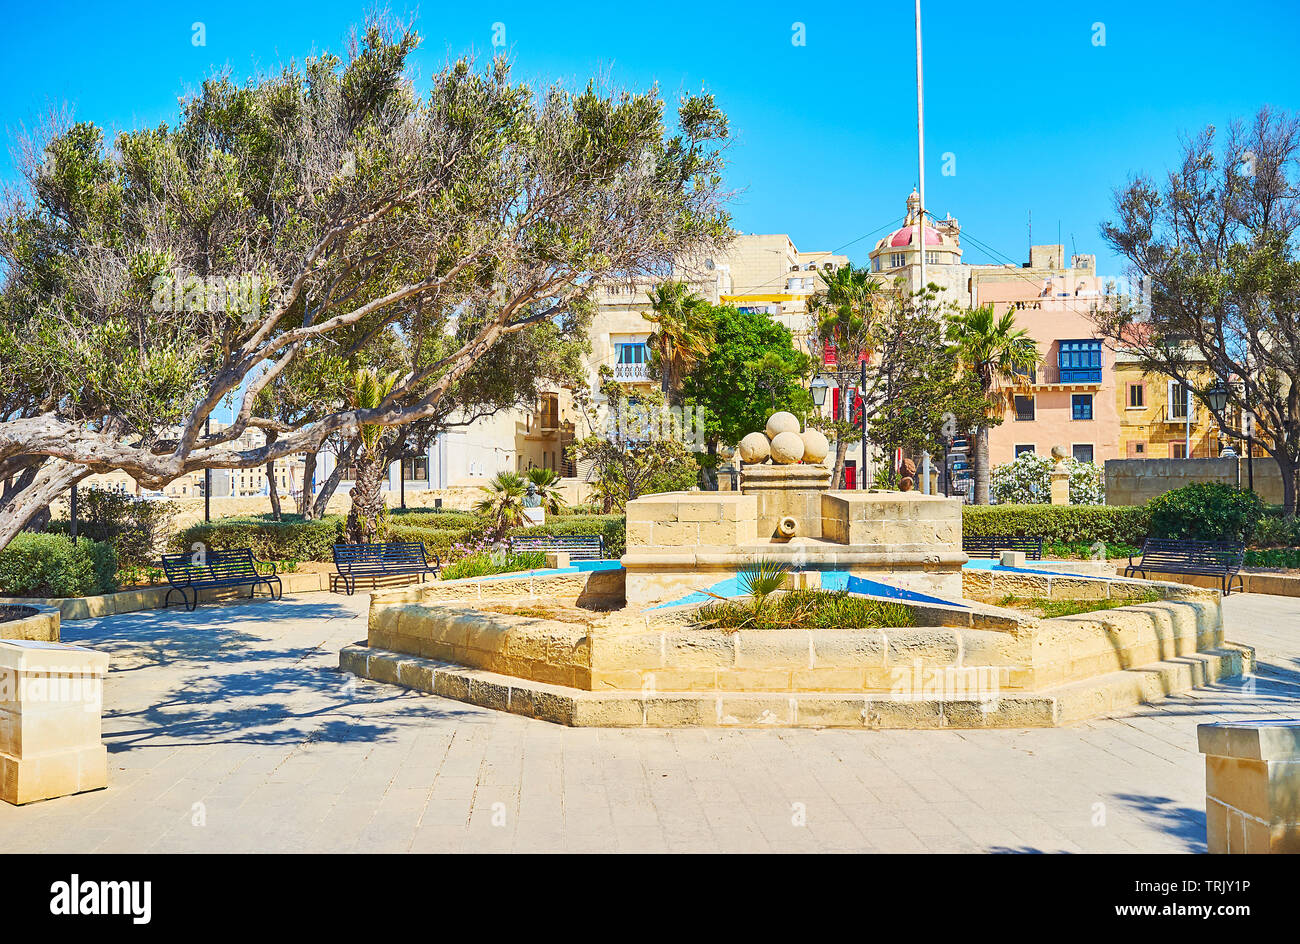 Relax in scenic Gardjola Gardens, located in upper town next to Guard Tower, Senglea, Malta Stock Photo